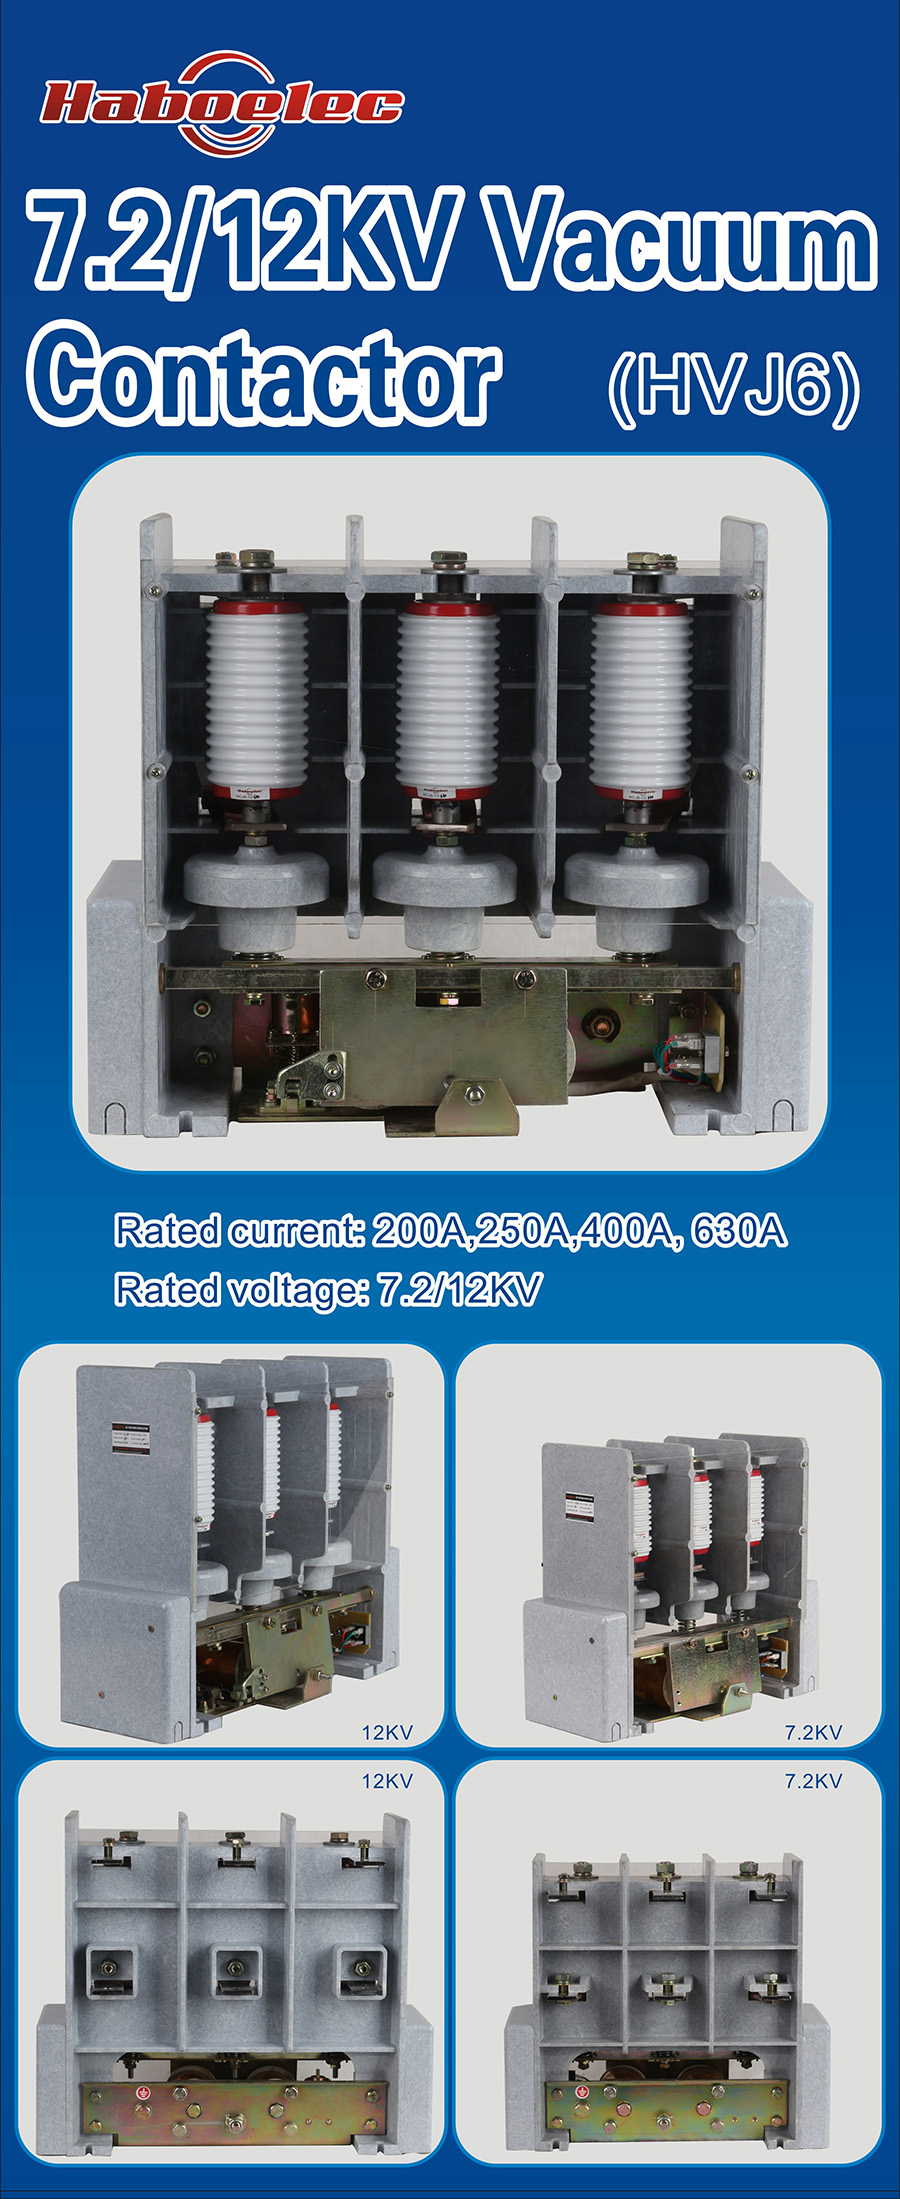 HVJ6-7.2KV 12KV vacuum contactor.jpg